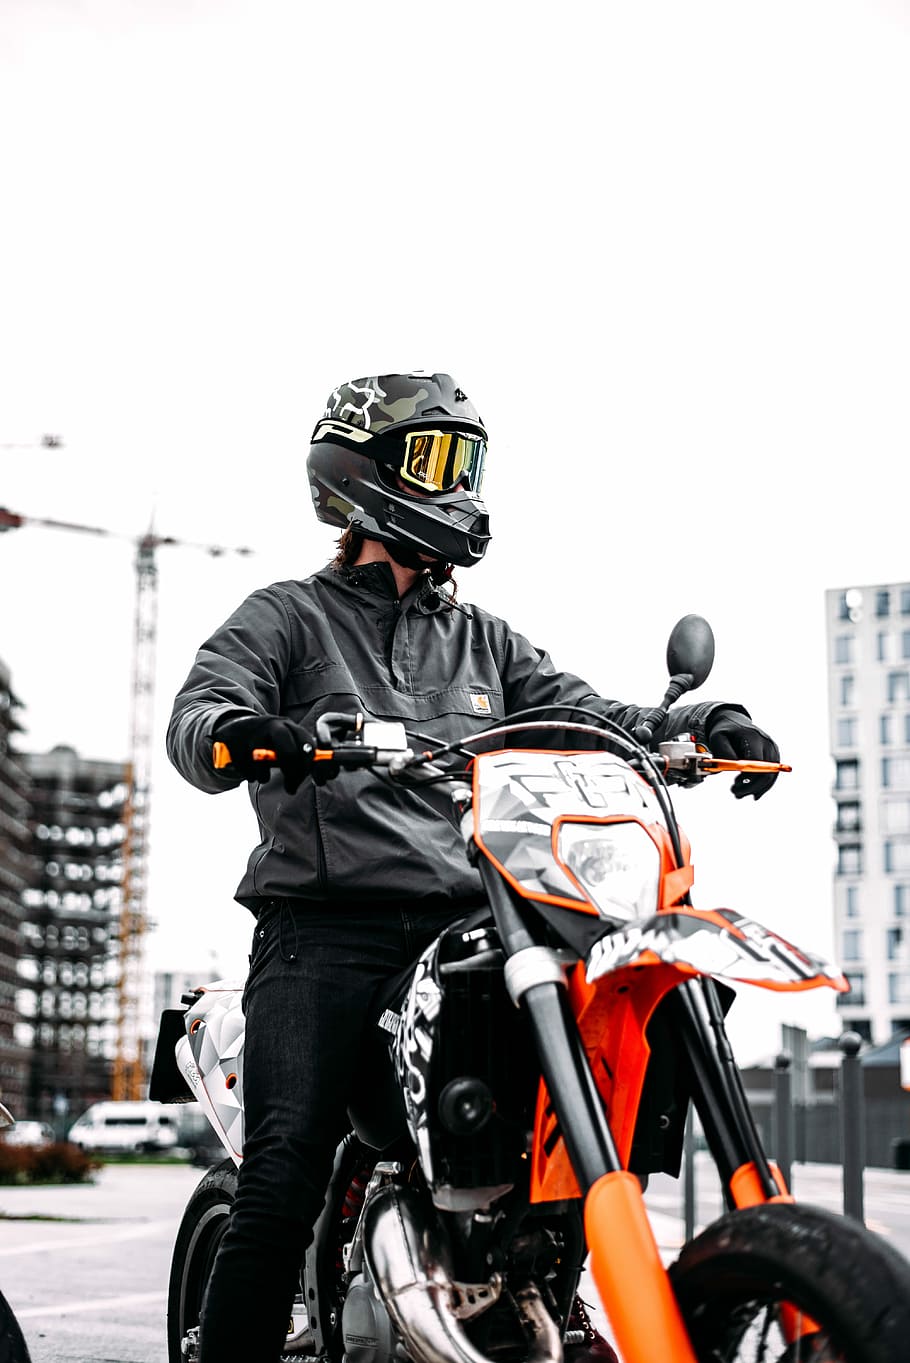 HD wallpaper: Ready?, man riding on motorcycle near buildings